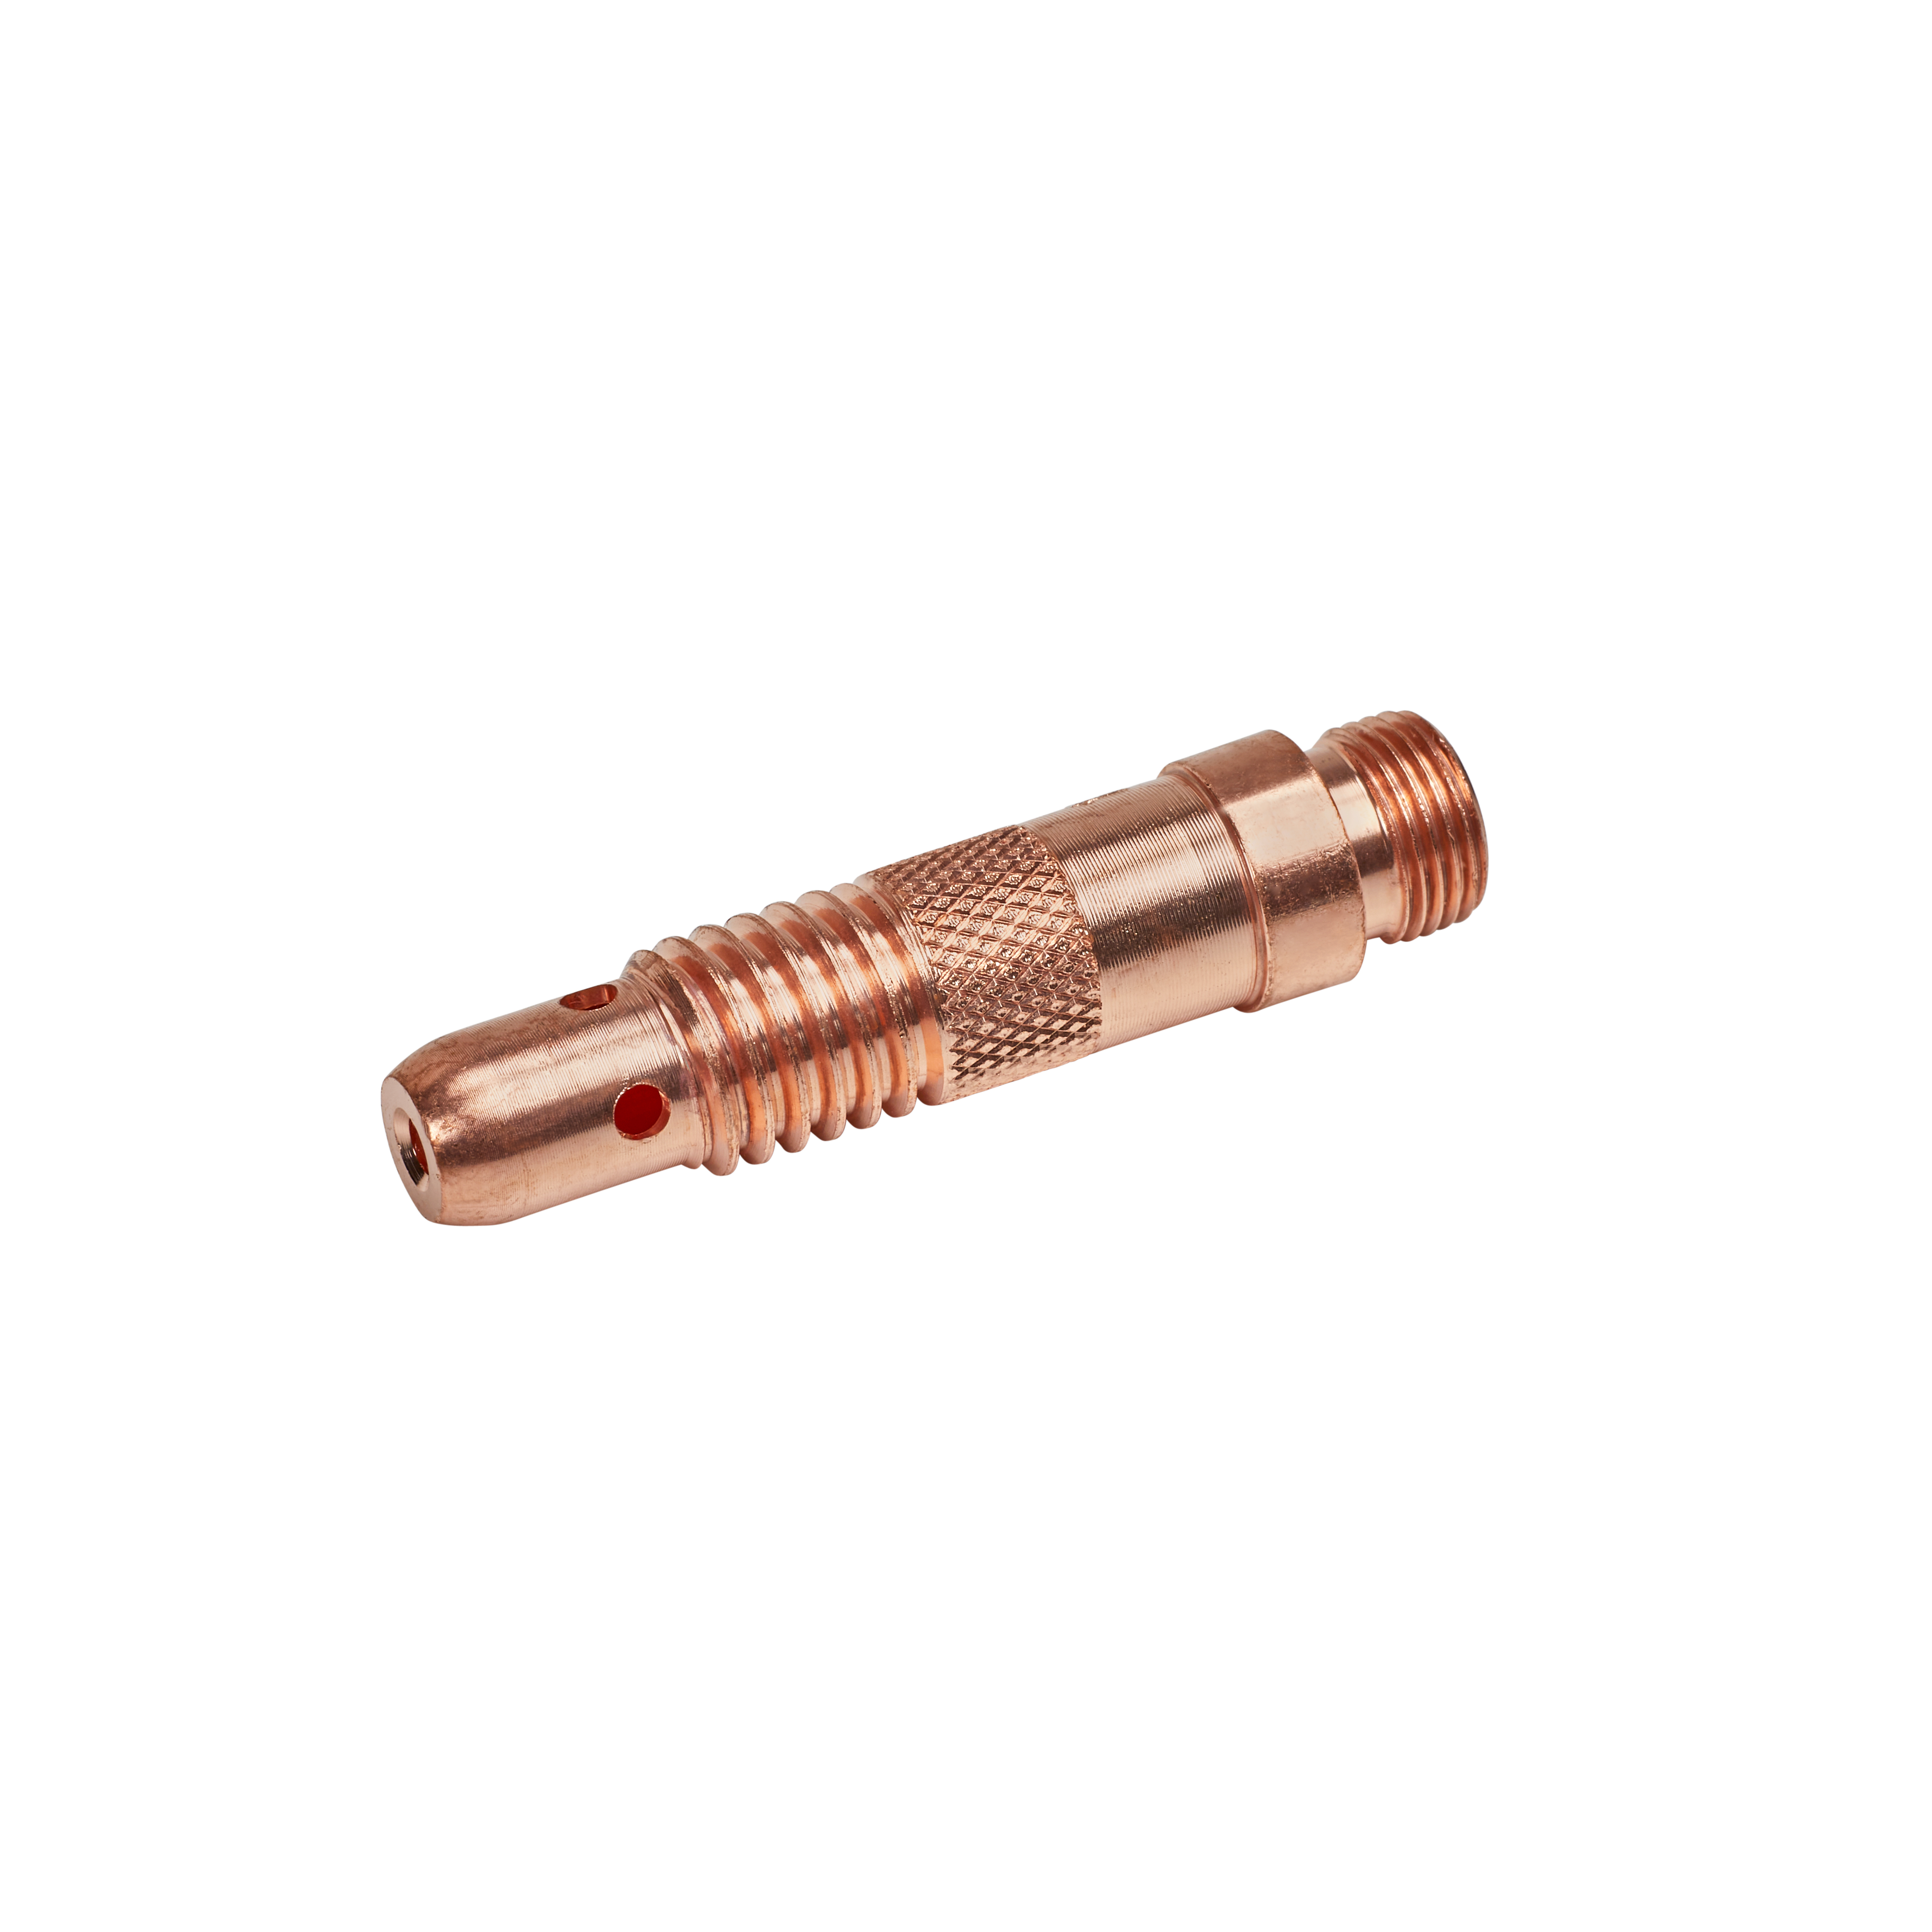 Weldmark by CK Worldwide 10N32 Copper Collet Body 3/32 (0.094) Max Electrode Diameter